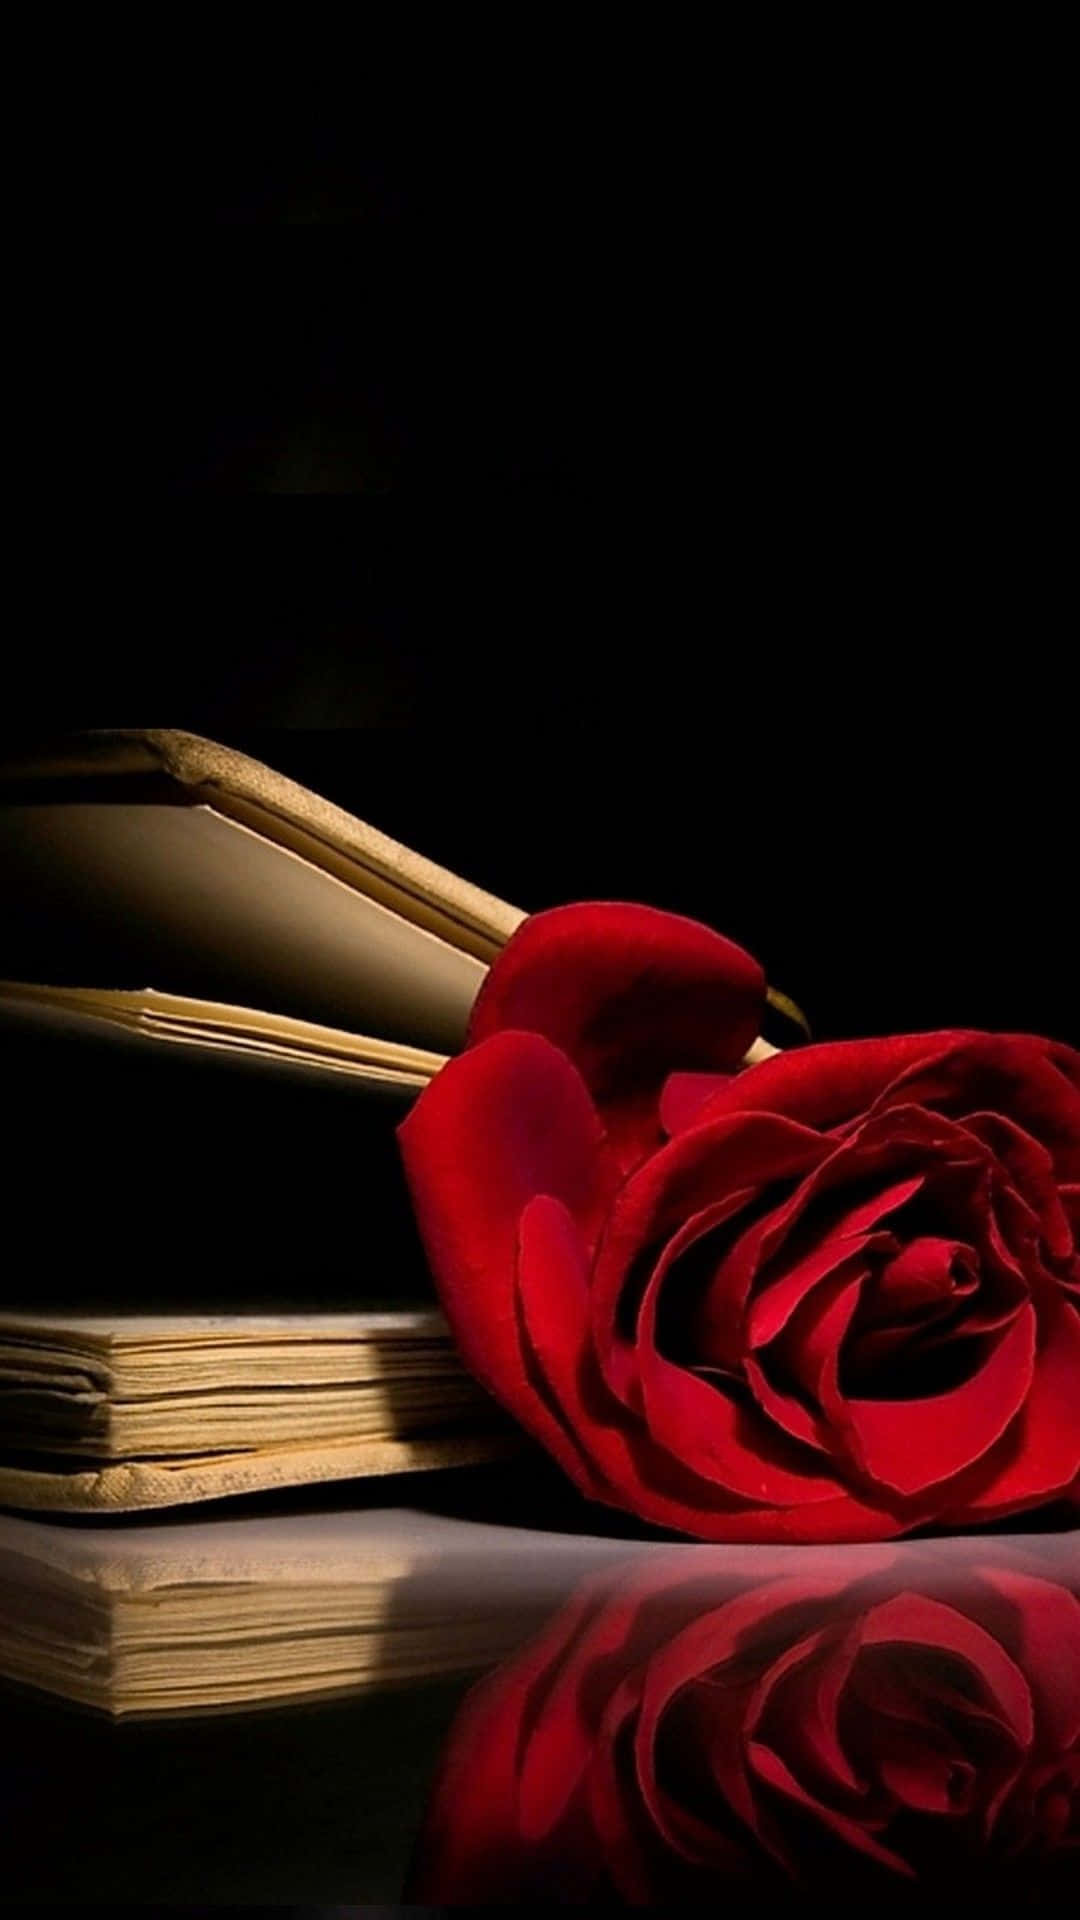 Red Rose Aesthetic In Book Wallpaper